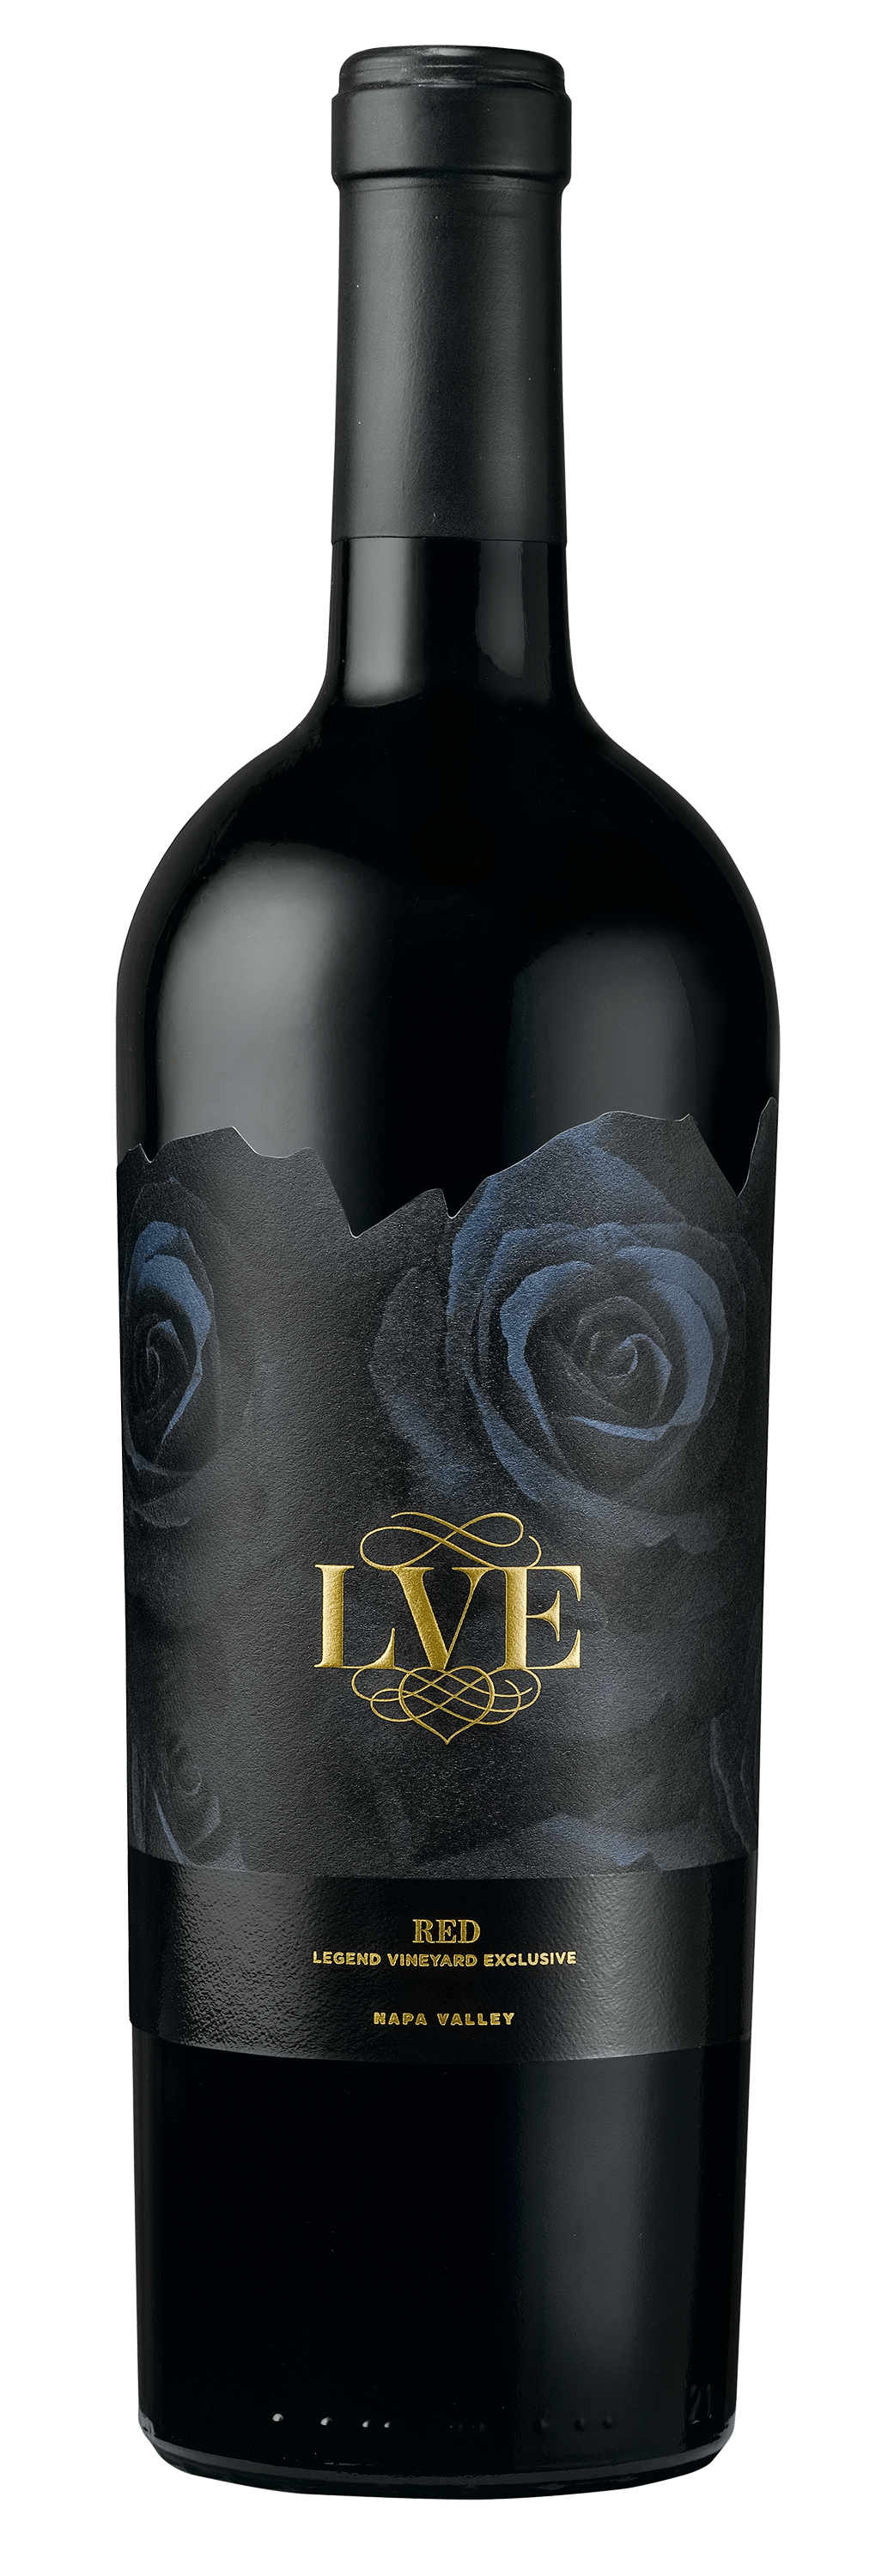 2017 LVE-Legend Vineyard Exclusive Napa Valley Red